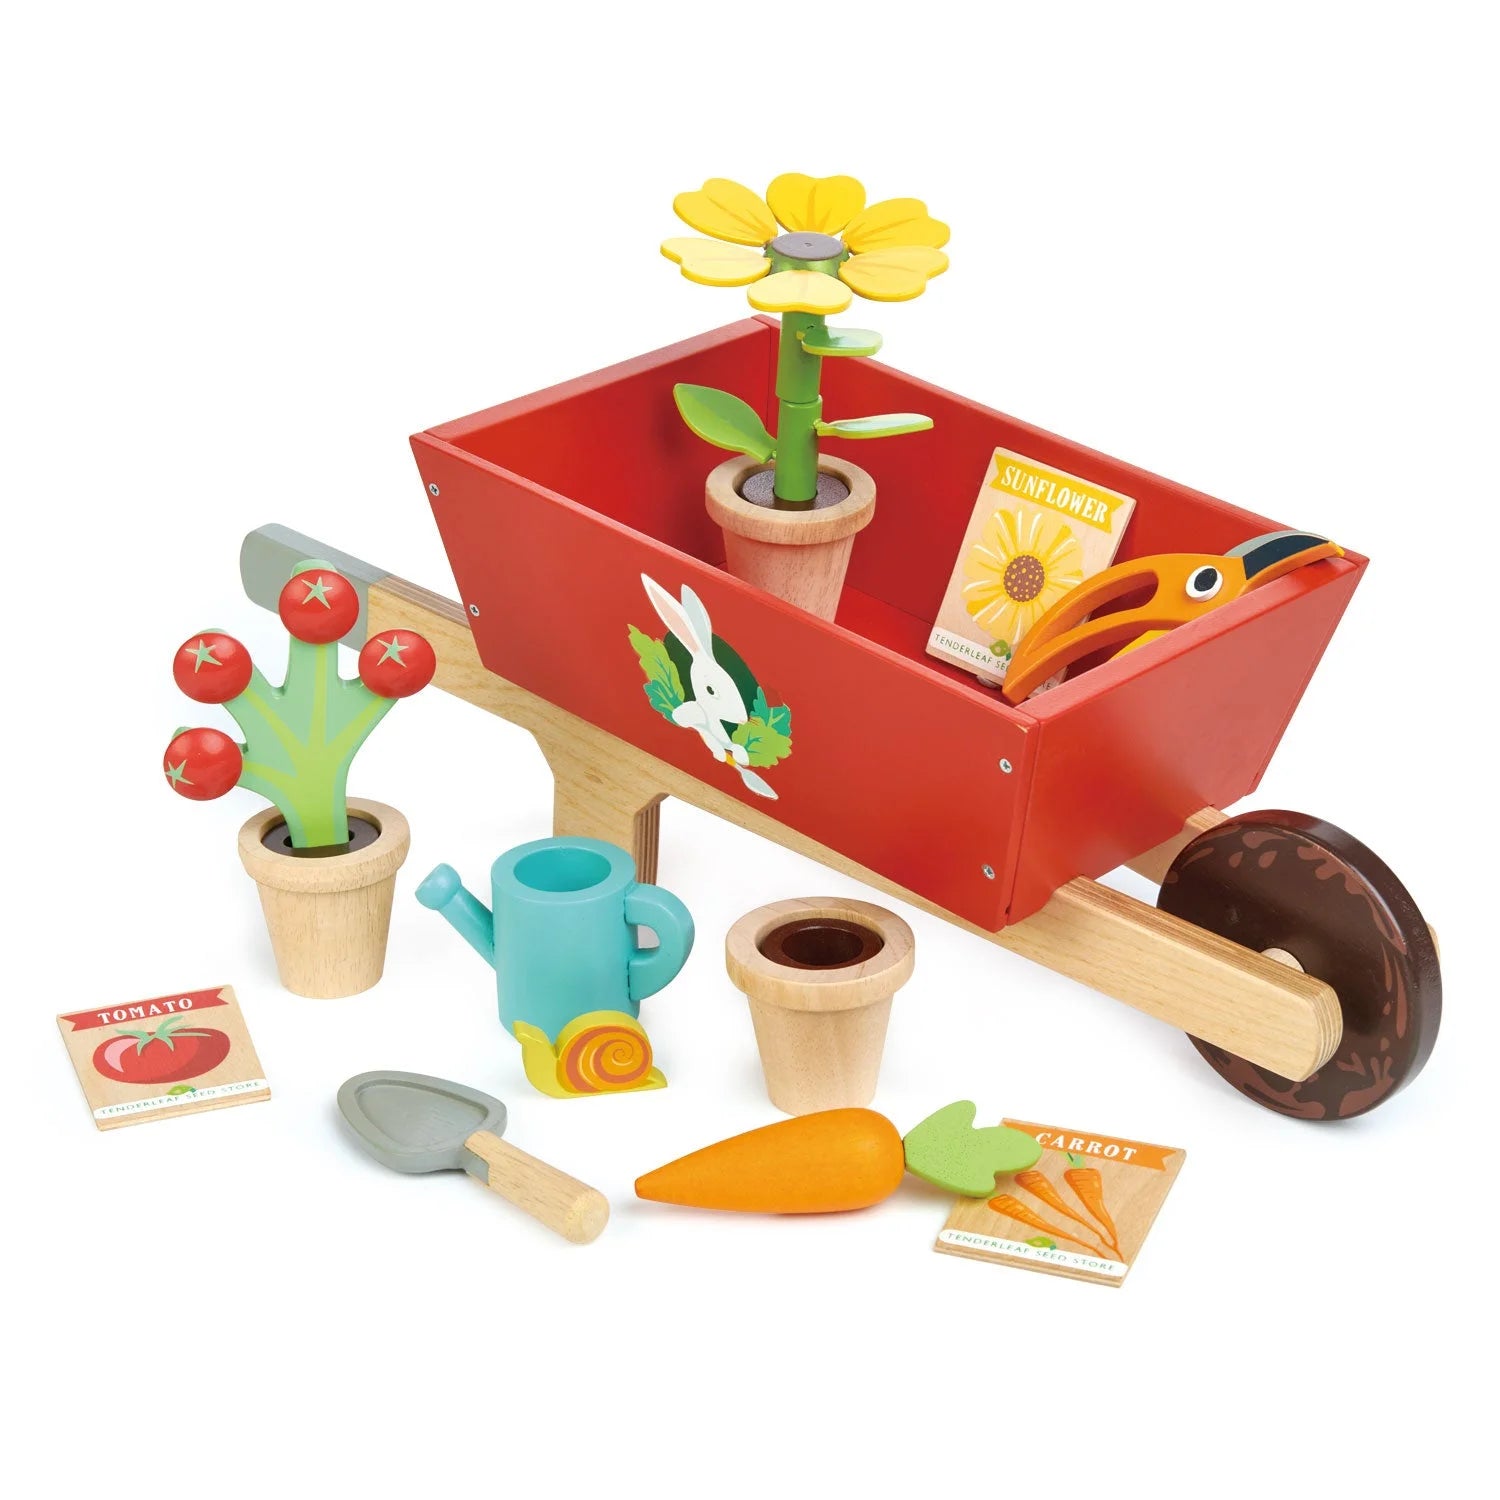 - Garden Wheelbarrow Set - Deluxe Garden Pretend Play Wooden Toy Set for Gardening - Educational, Creative and Imaginative Fun in Garden for Children 3+ TL8357